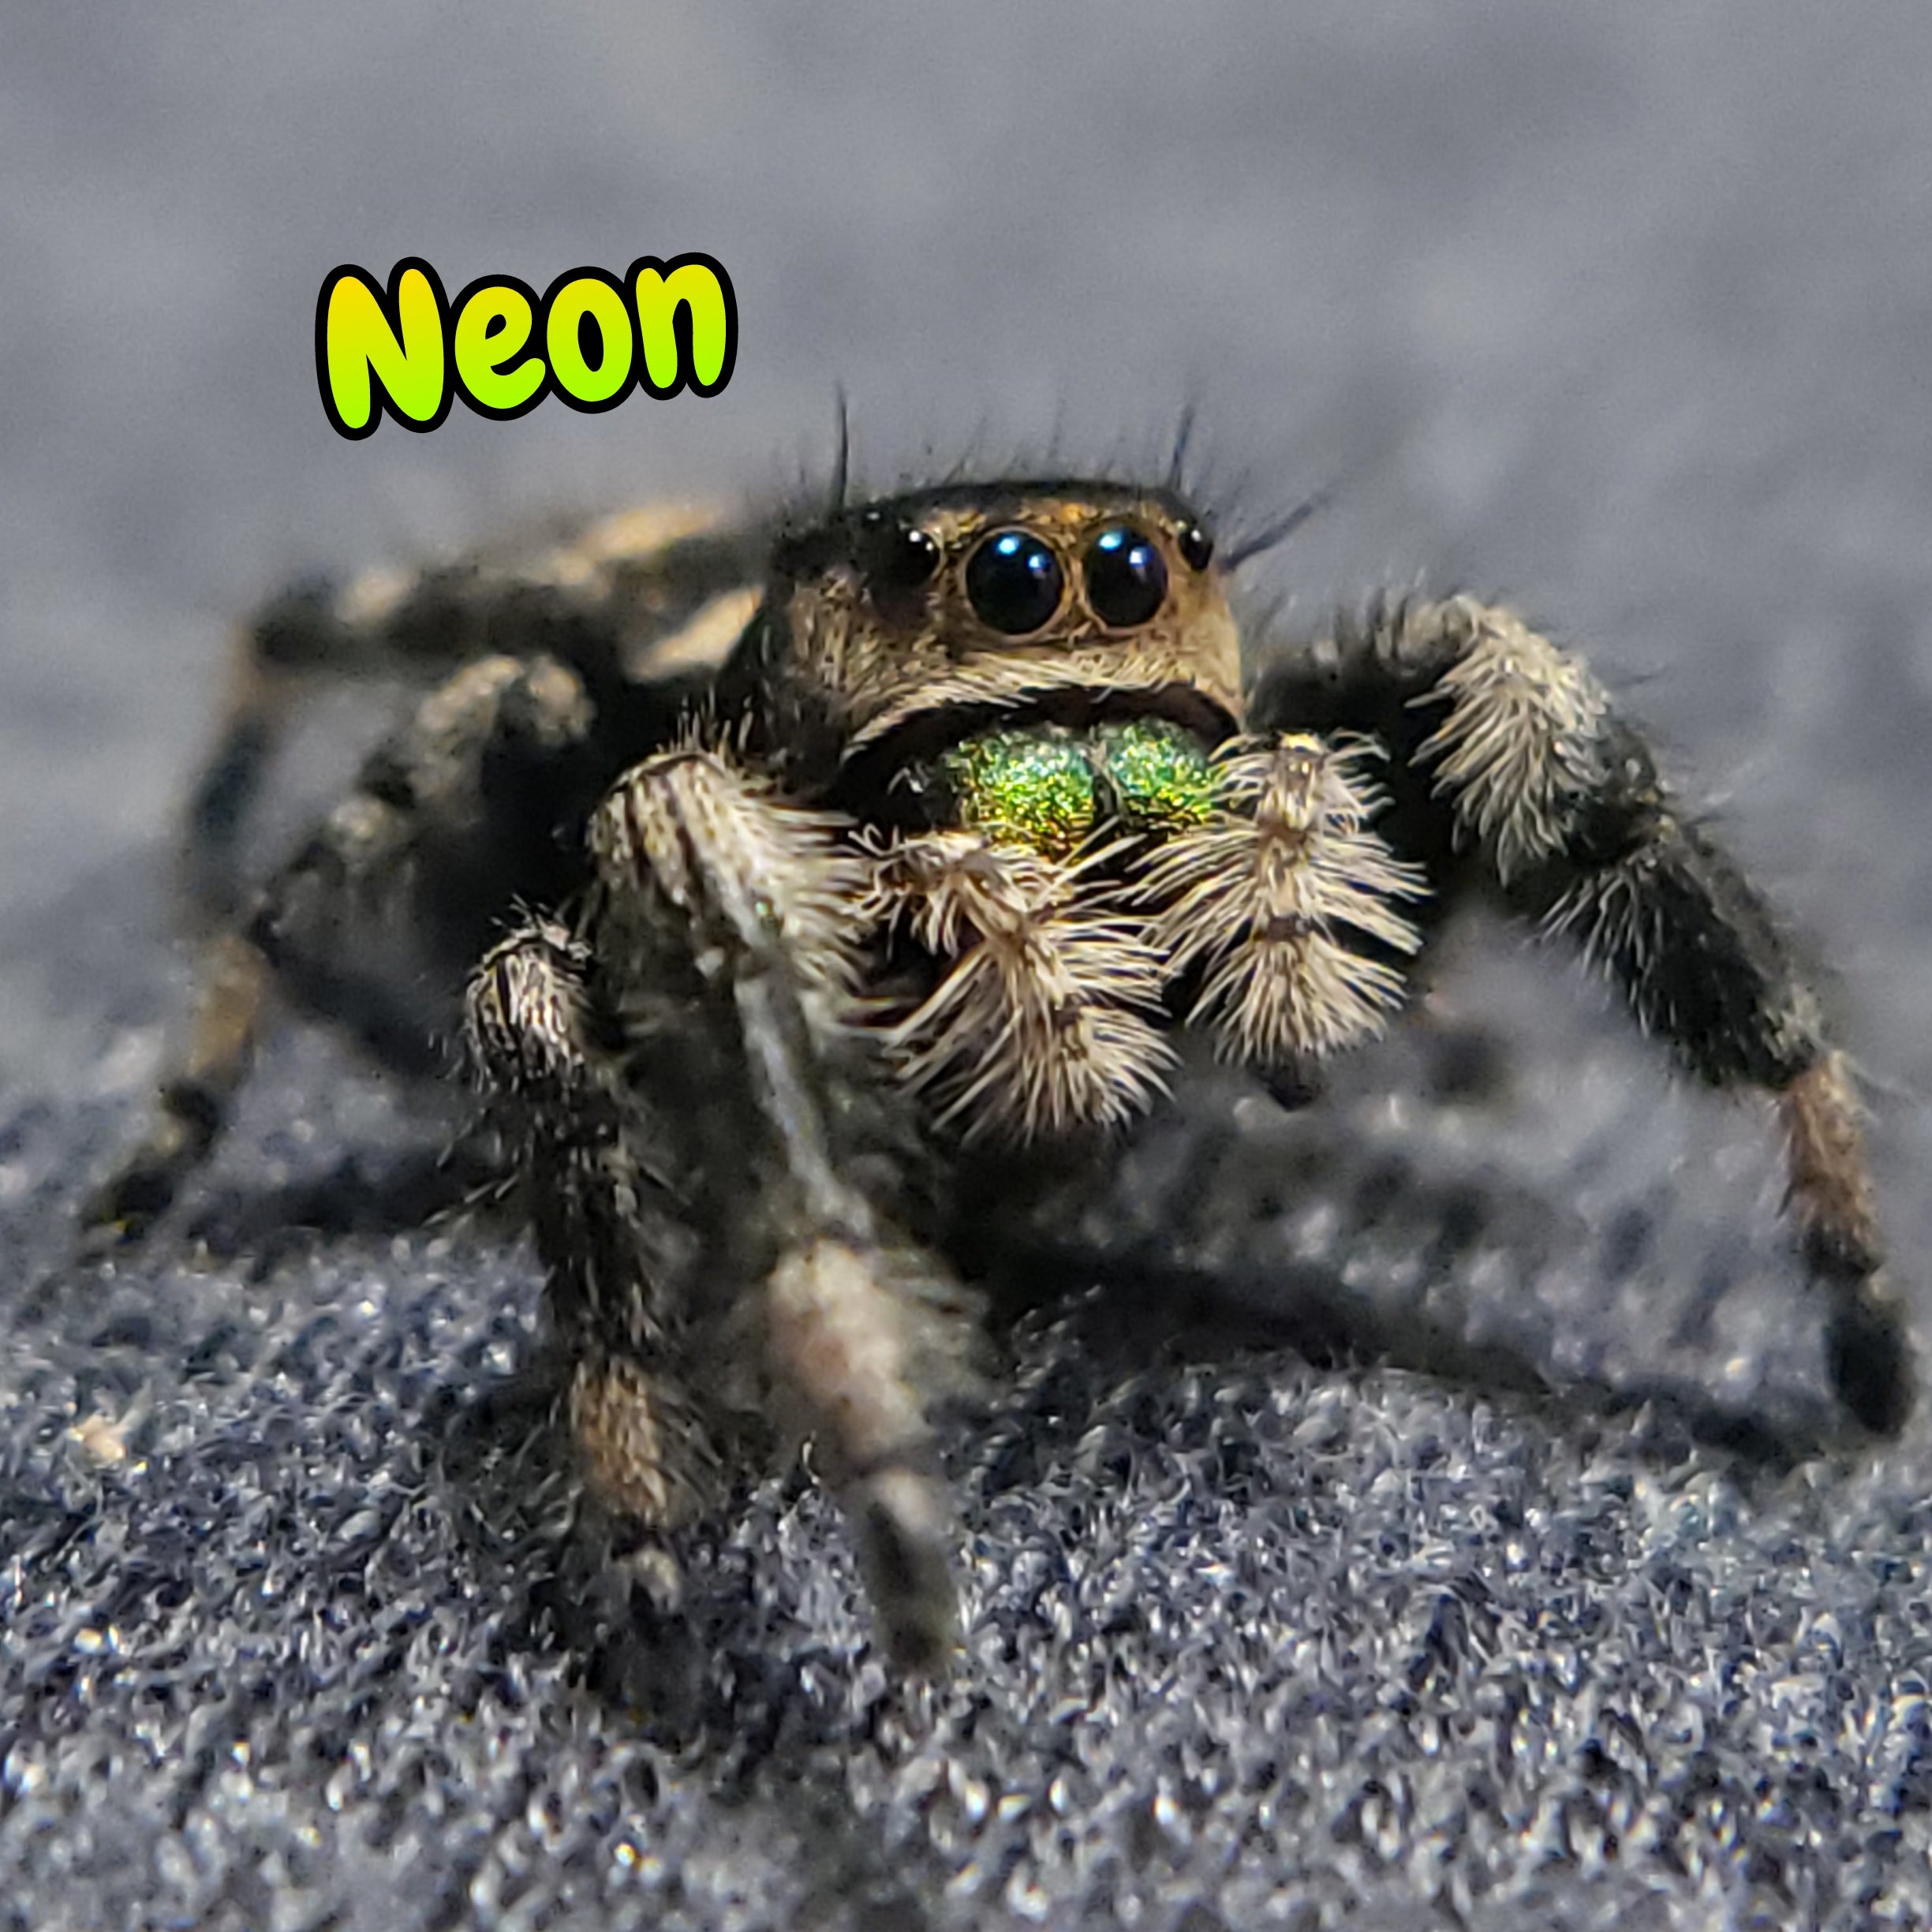 Regal Jumping Spider "Neon"